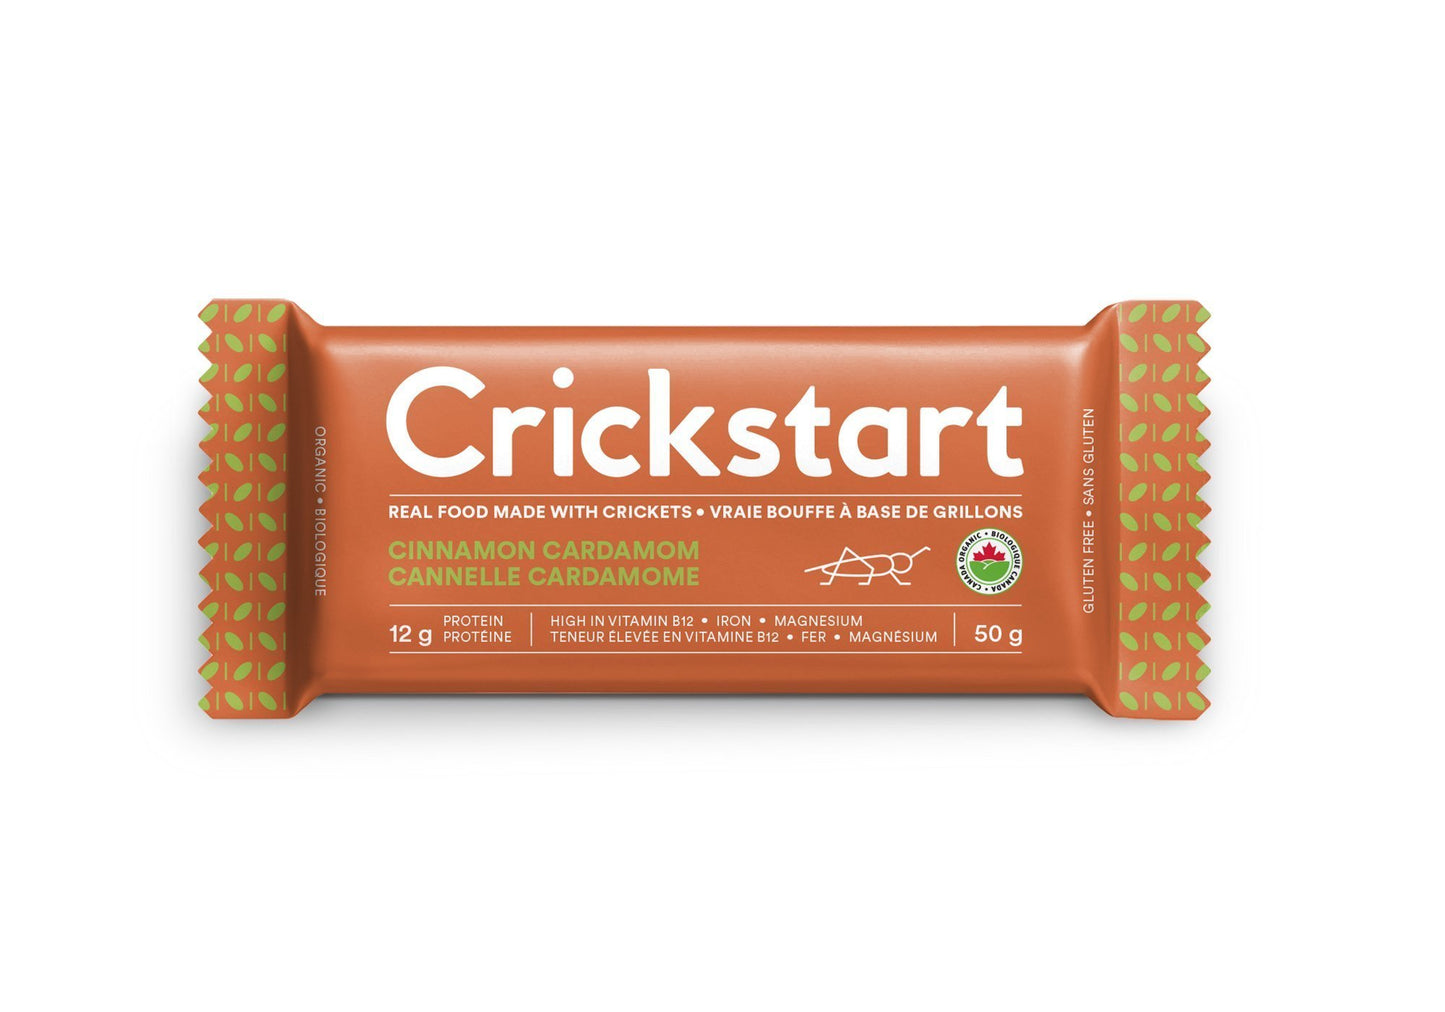 Cricket Protein Bar - Crickstart